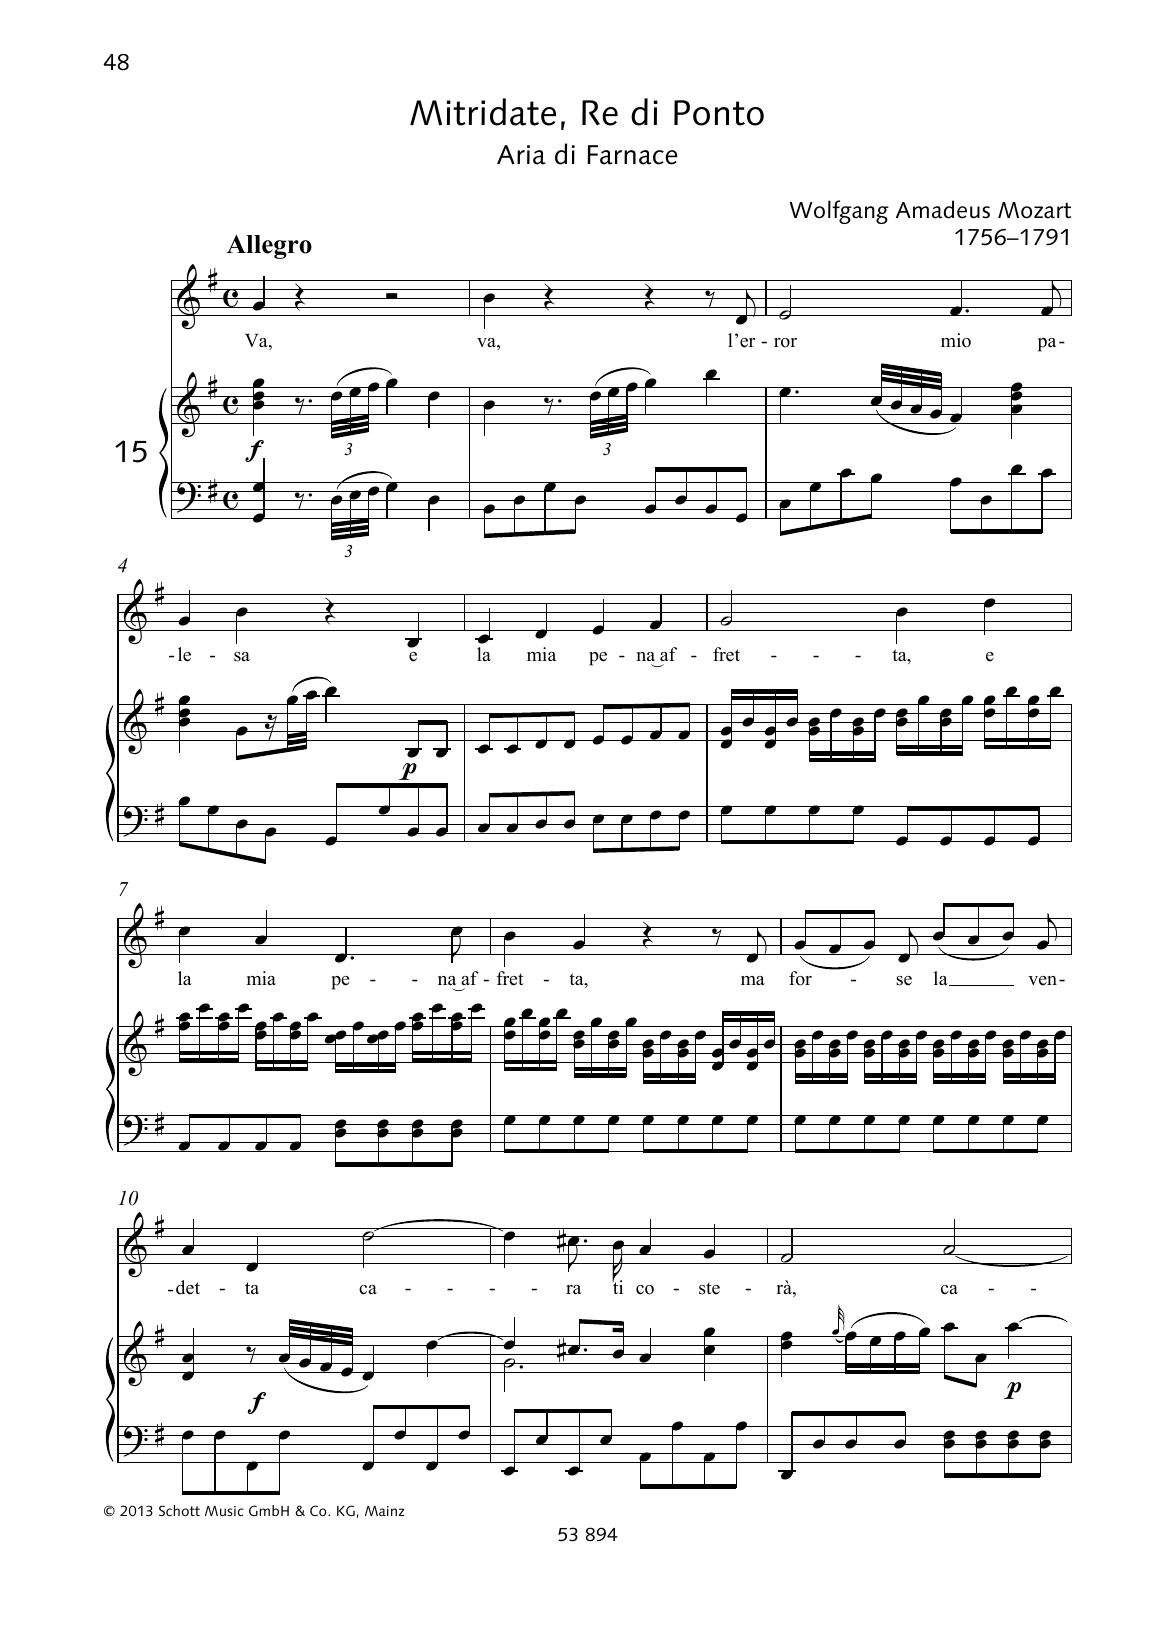 Wolfgang Amadeus Mozart Va, va, l'error mio palesa sheet music notes and chords arranged for Piano & Vocal